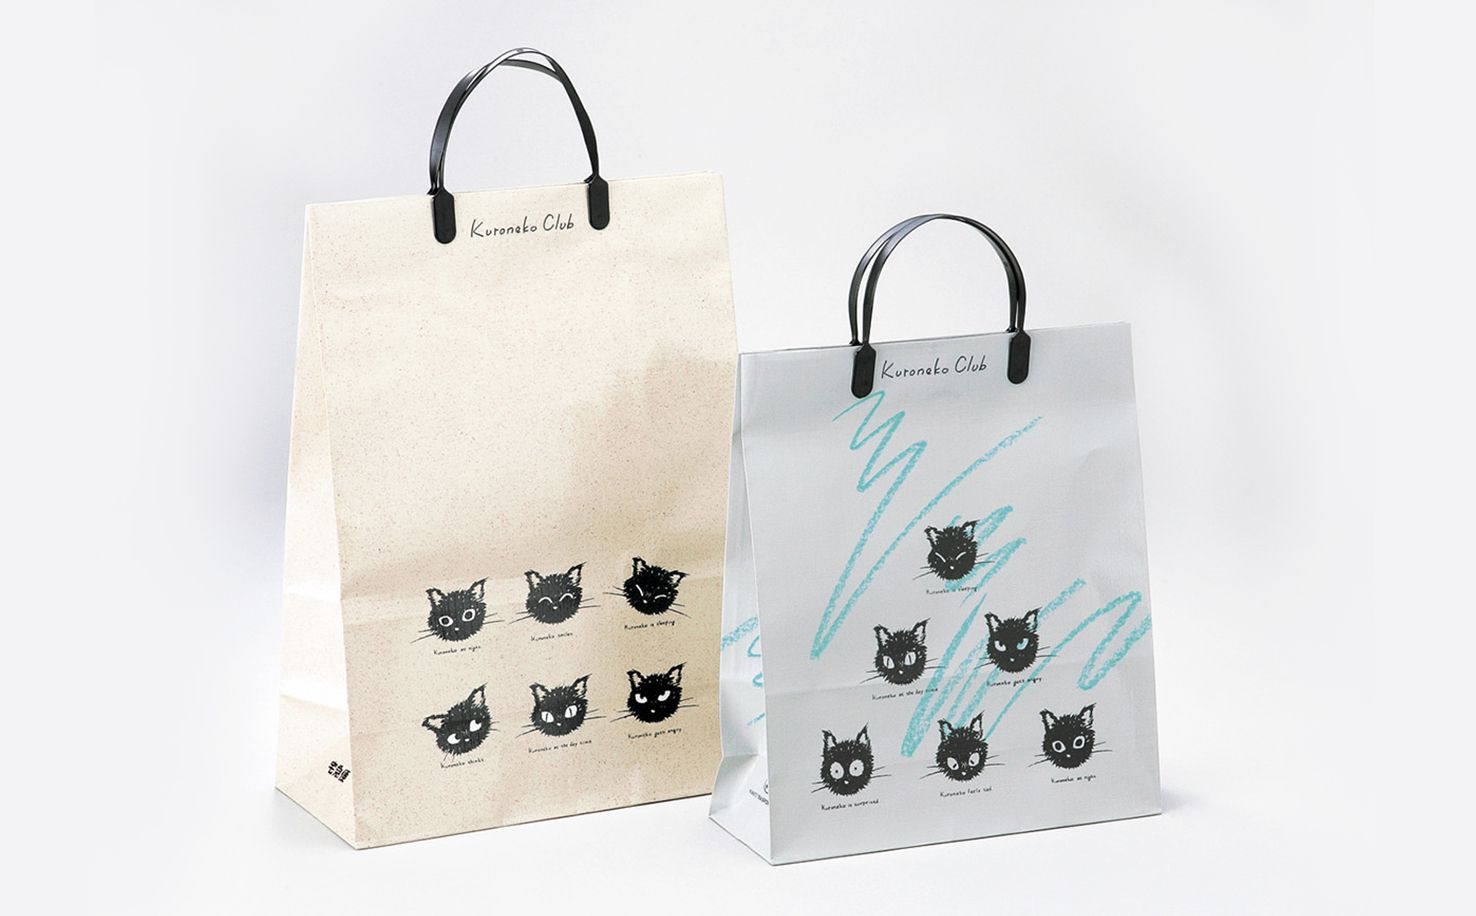 Japanese apparel maker brings back “Derelicte” style with Danbo cardboard  box bags | SoraNews24 -Japan News-